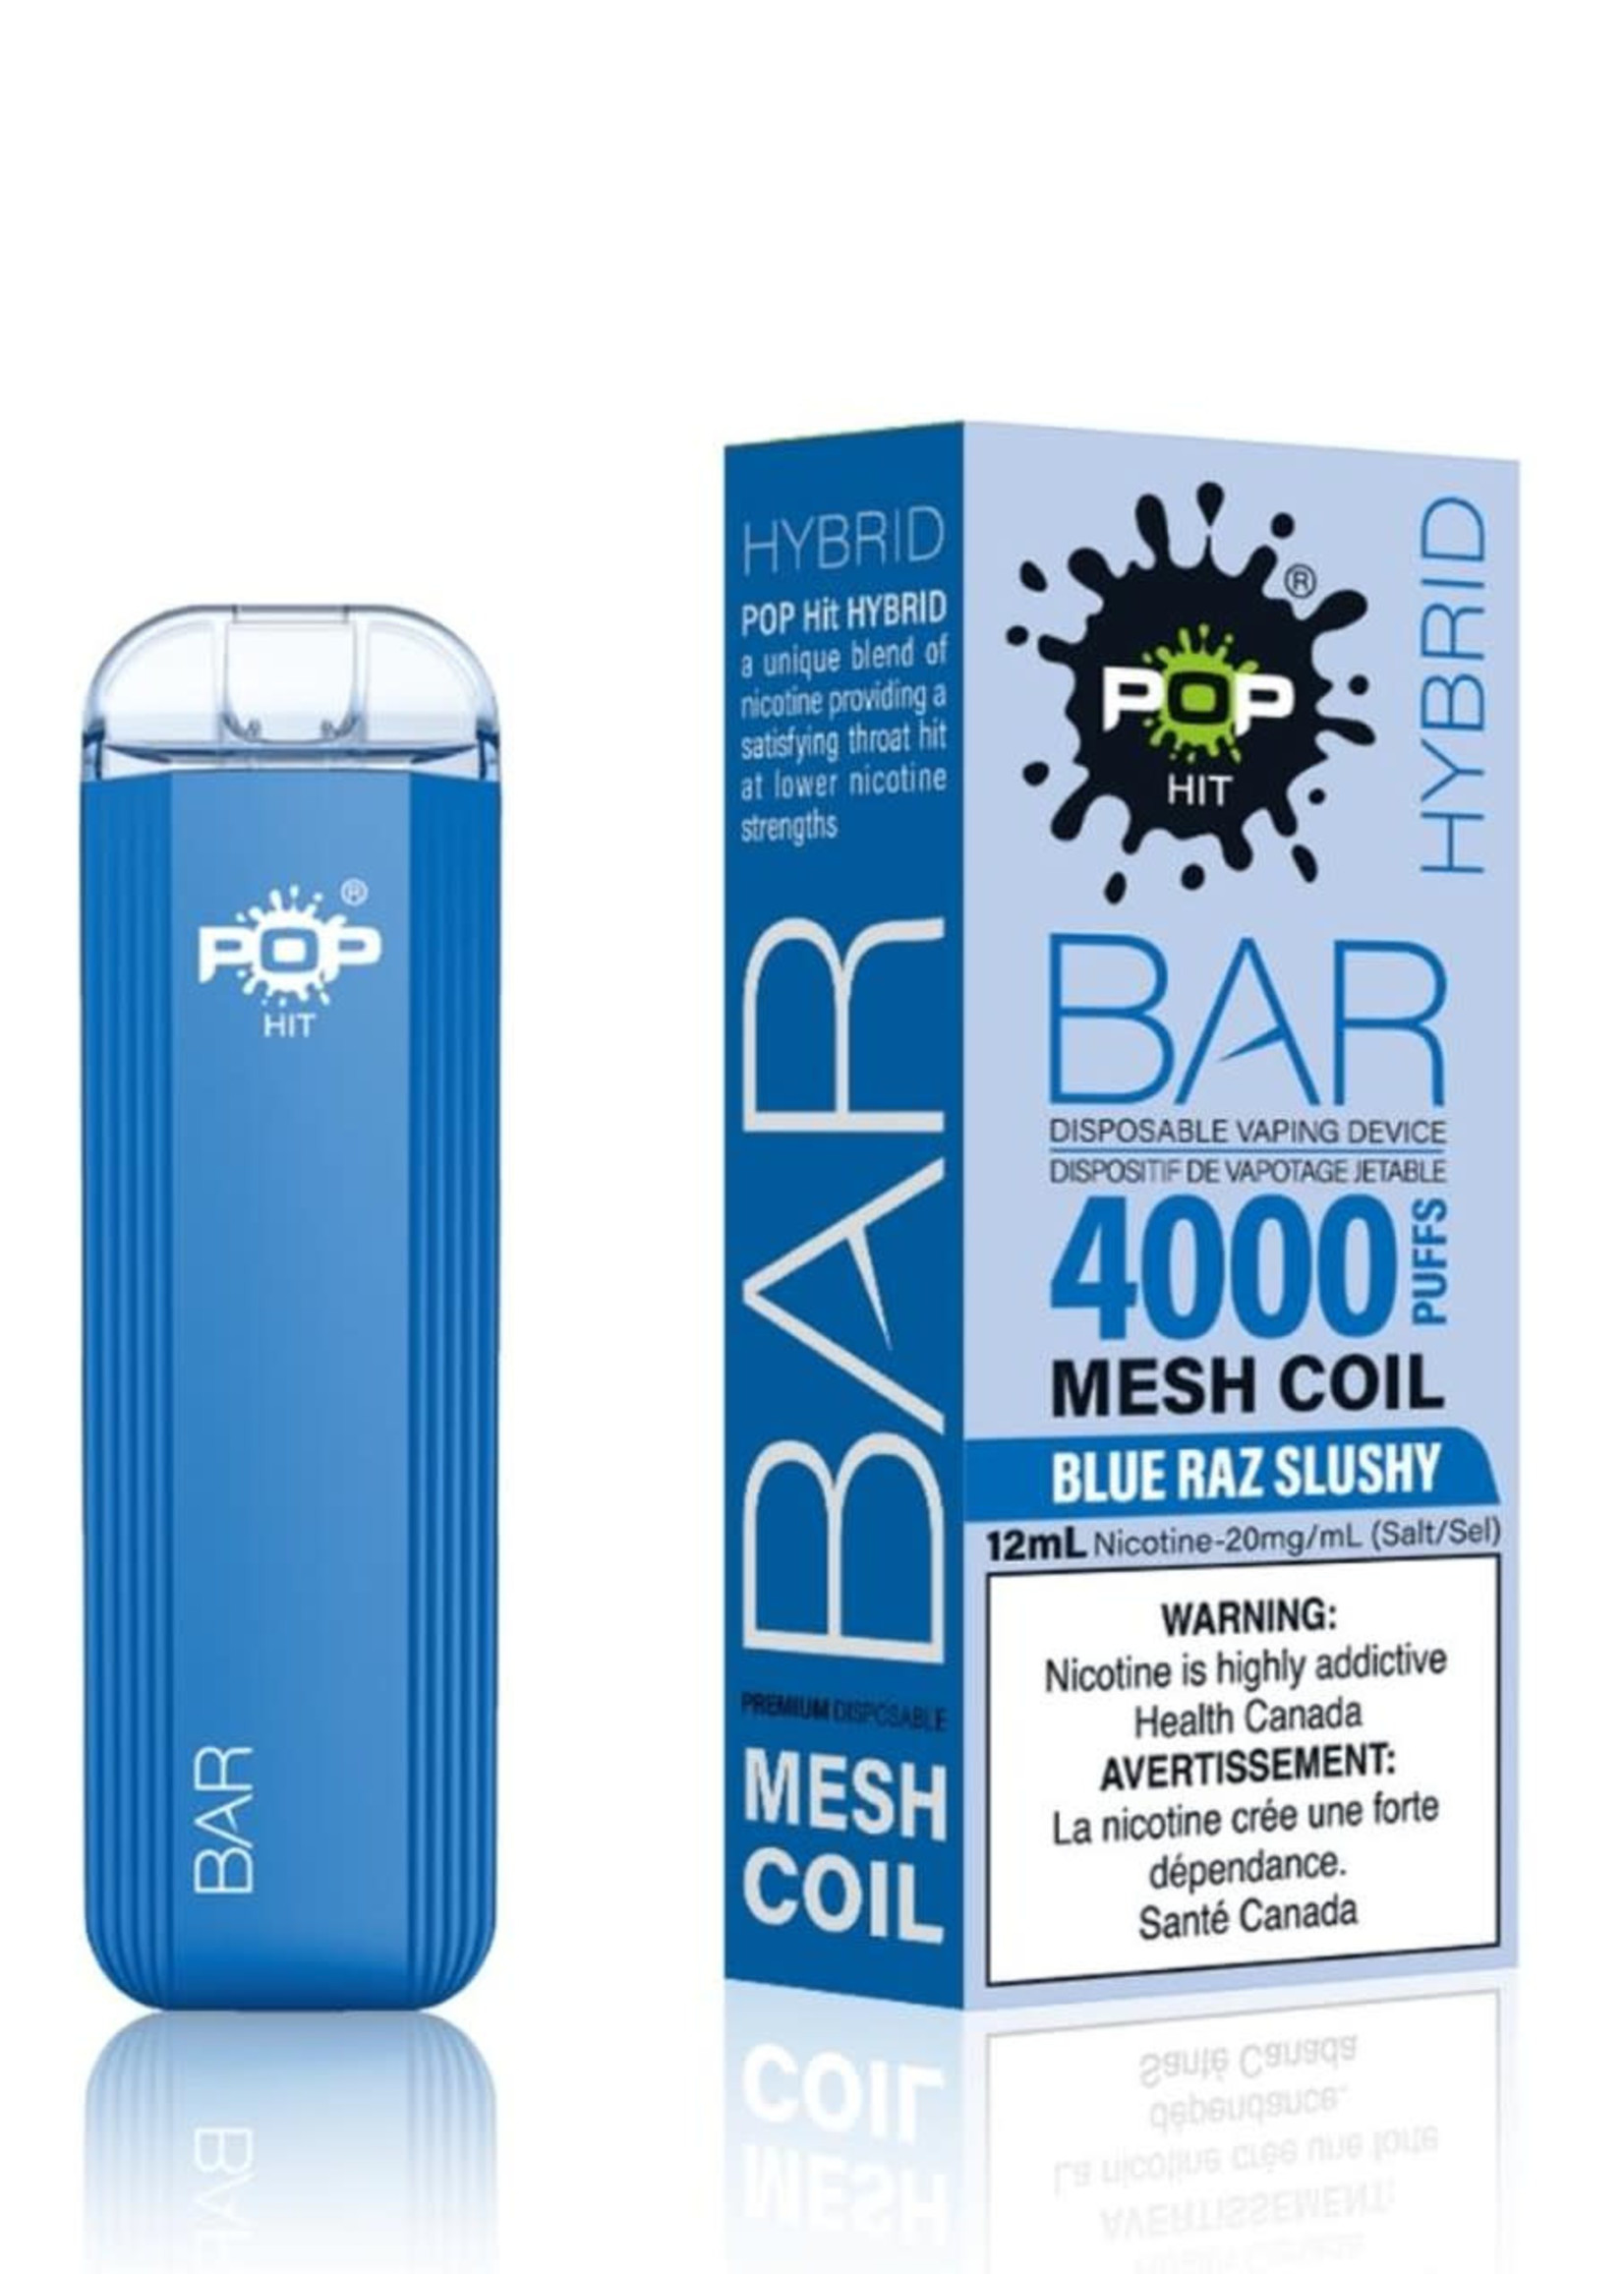 Pop Hybrid Bar Blue Raz Slushy - Pop Hybrid Bar 4000